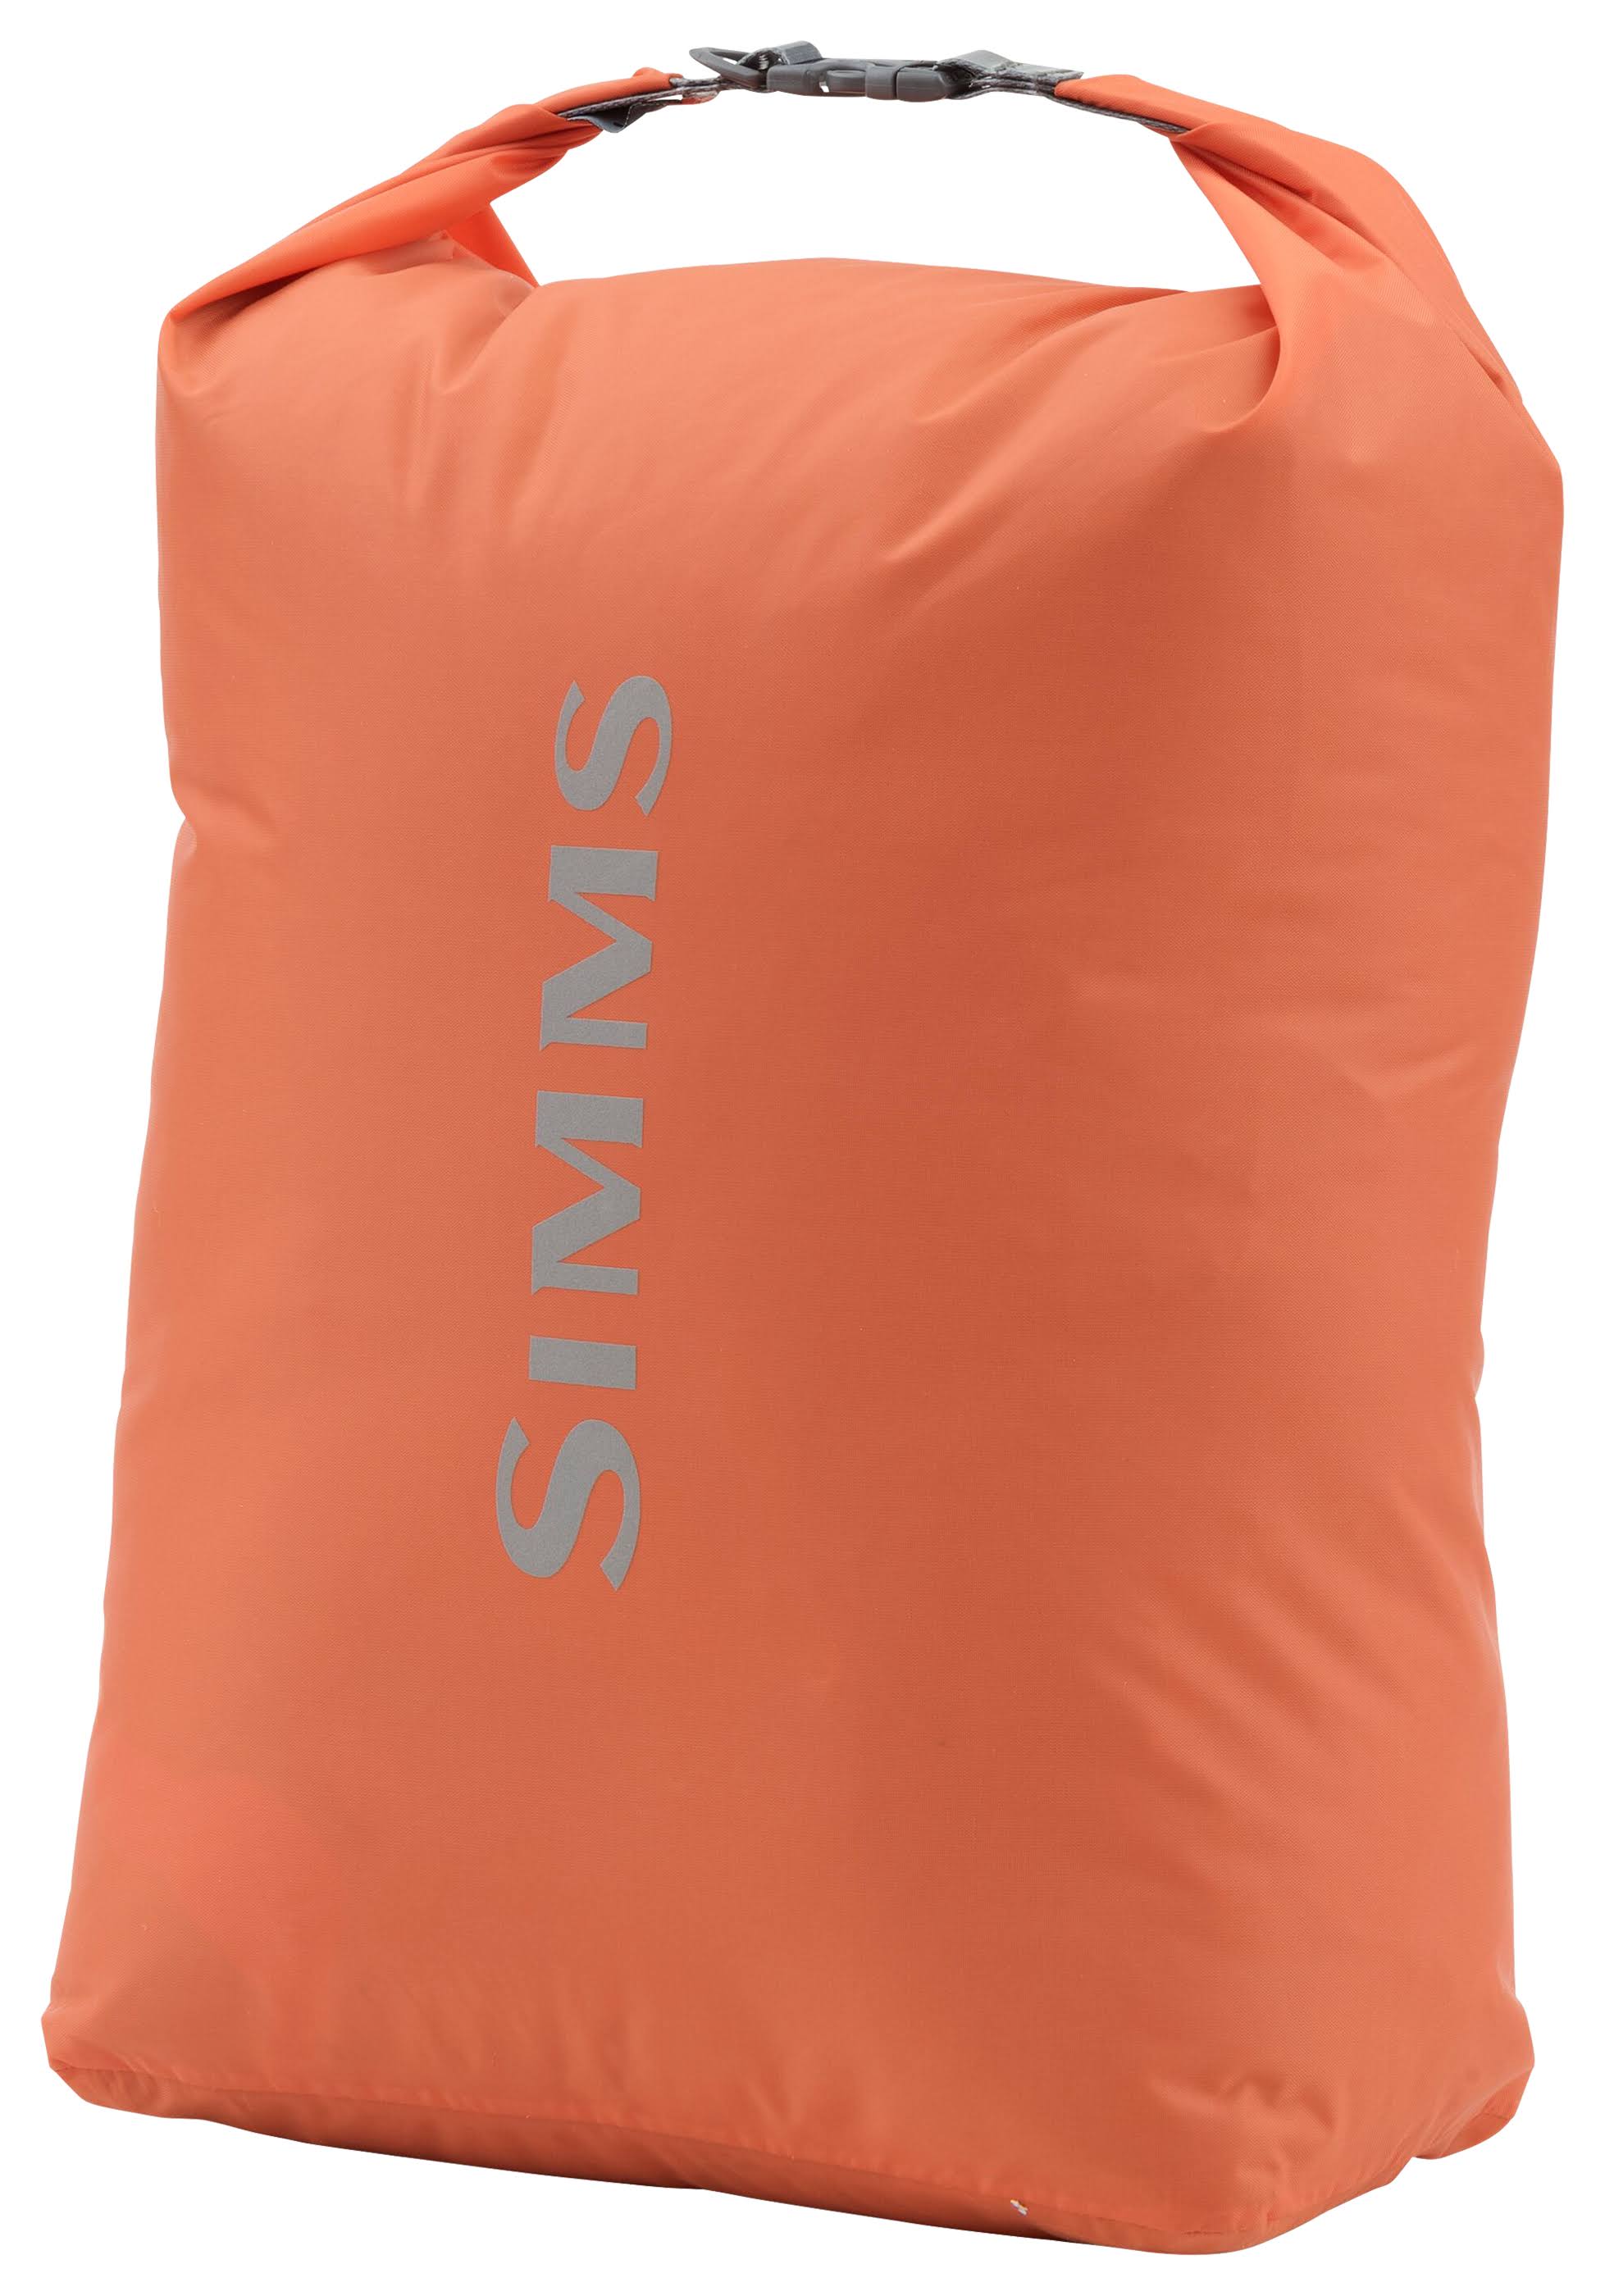 Simms Dry Creek Dry Bag - Bright Orange, Large